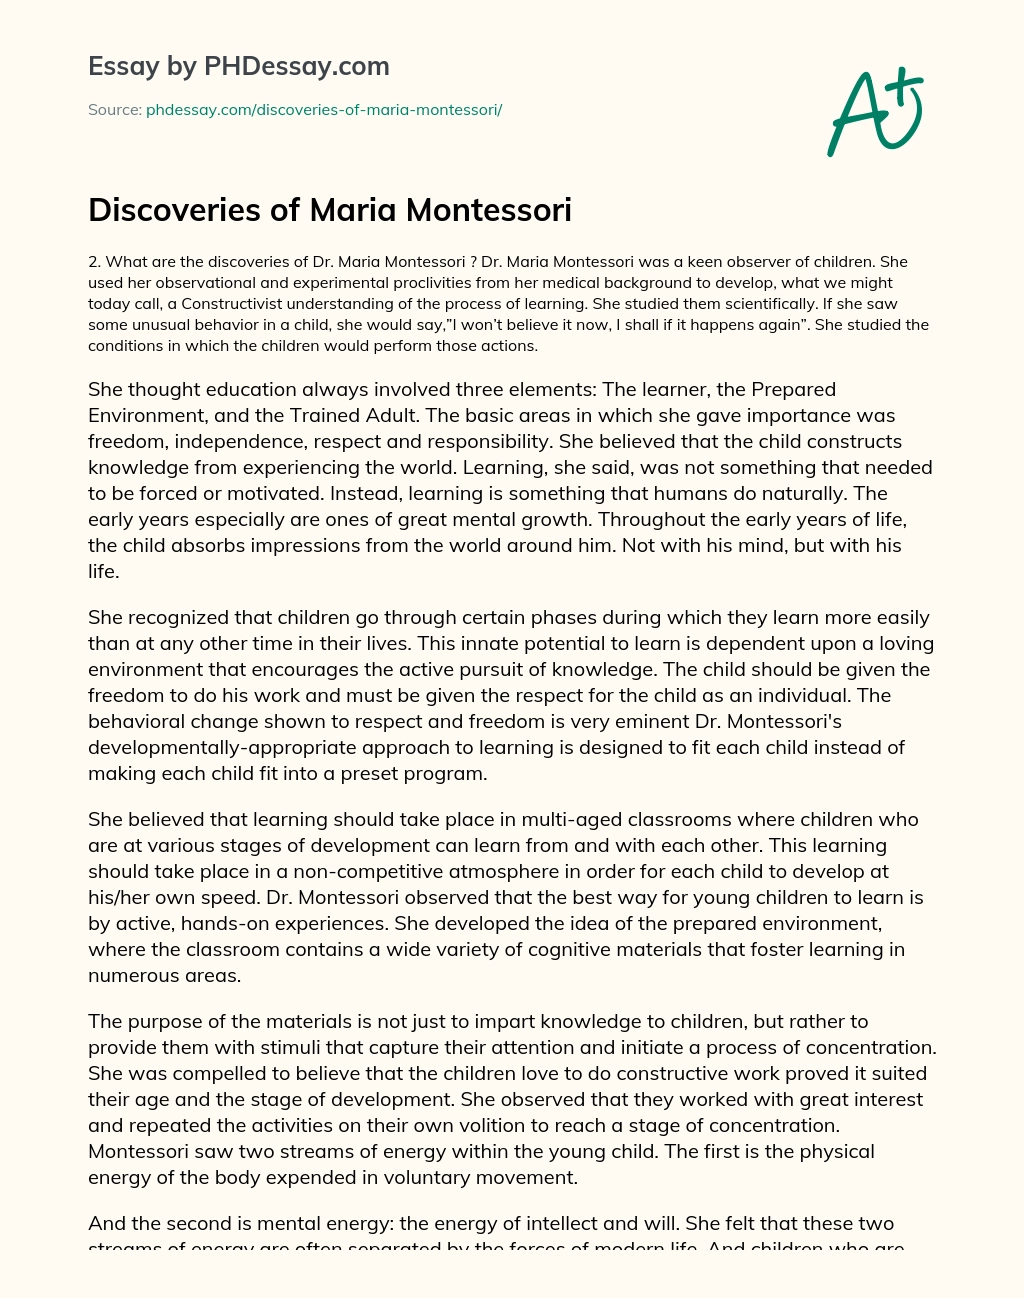 Discoveries of Maria Montessori essay